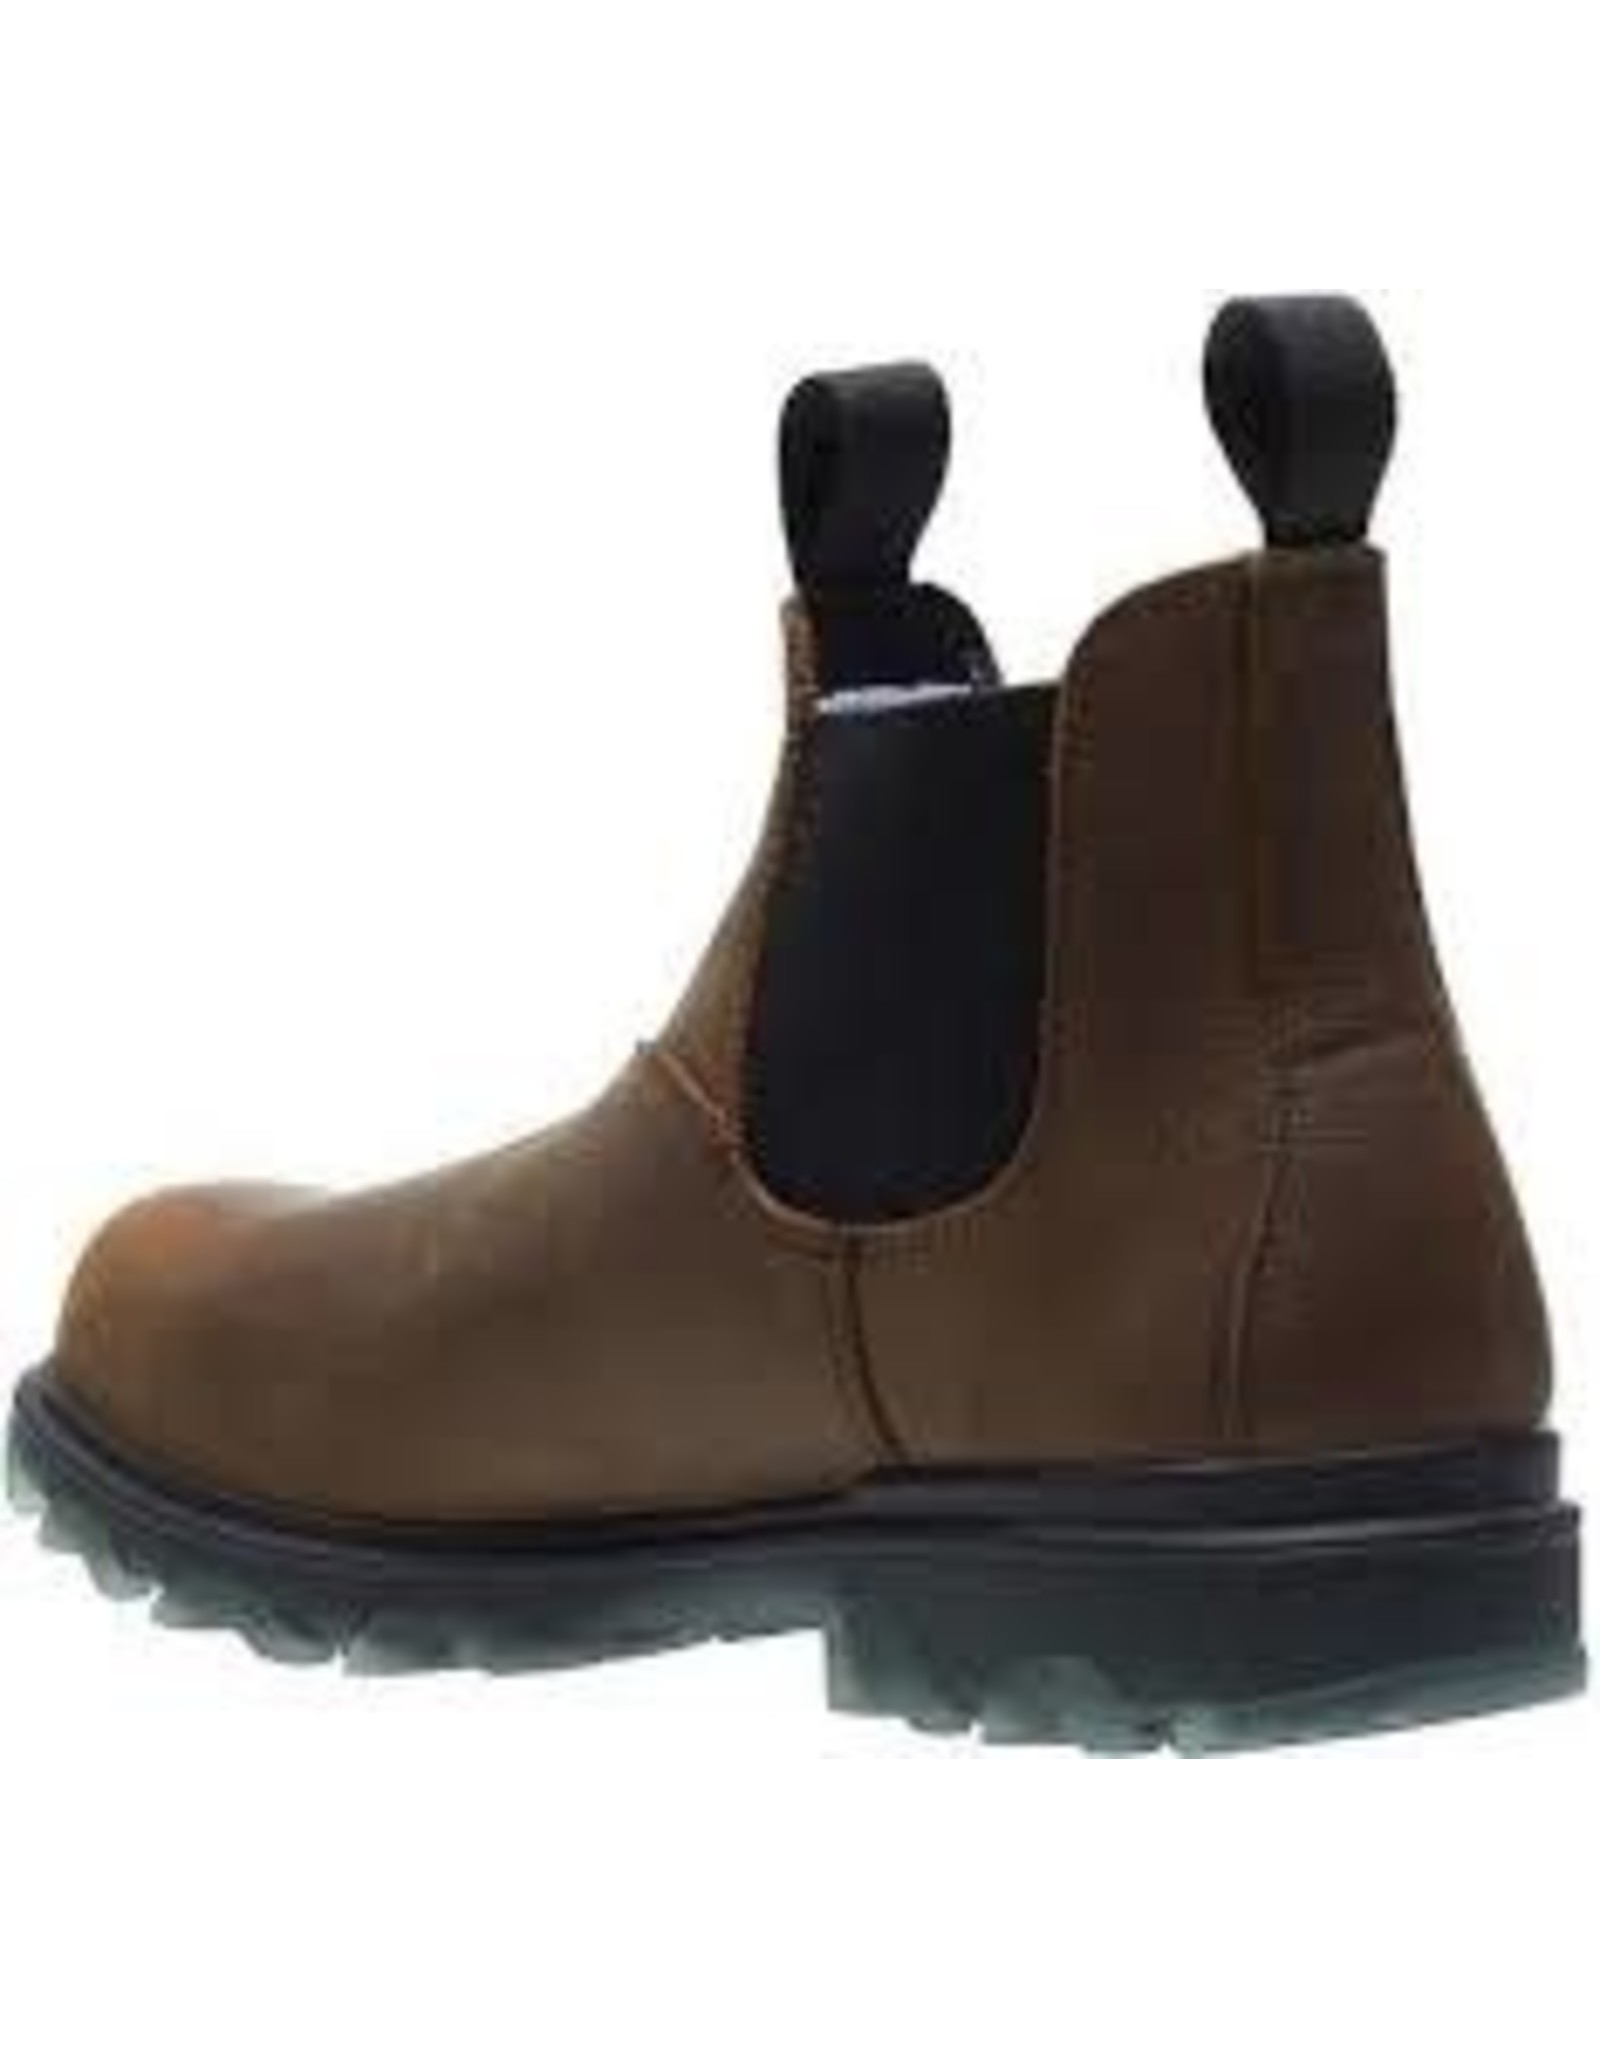 Wolverine Men's I-90 Romeo W10790 Waterproof Soft Toe Work Boots